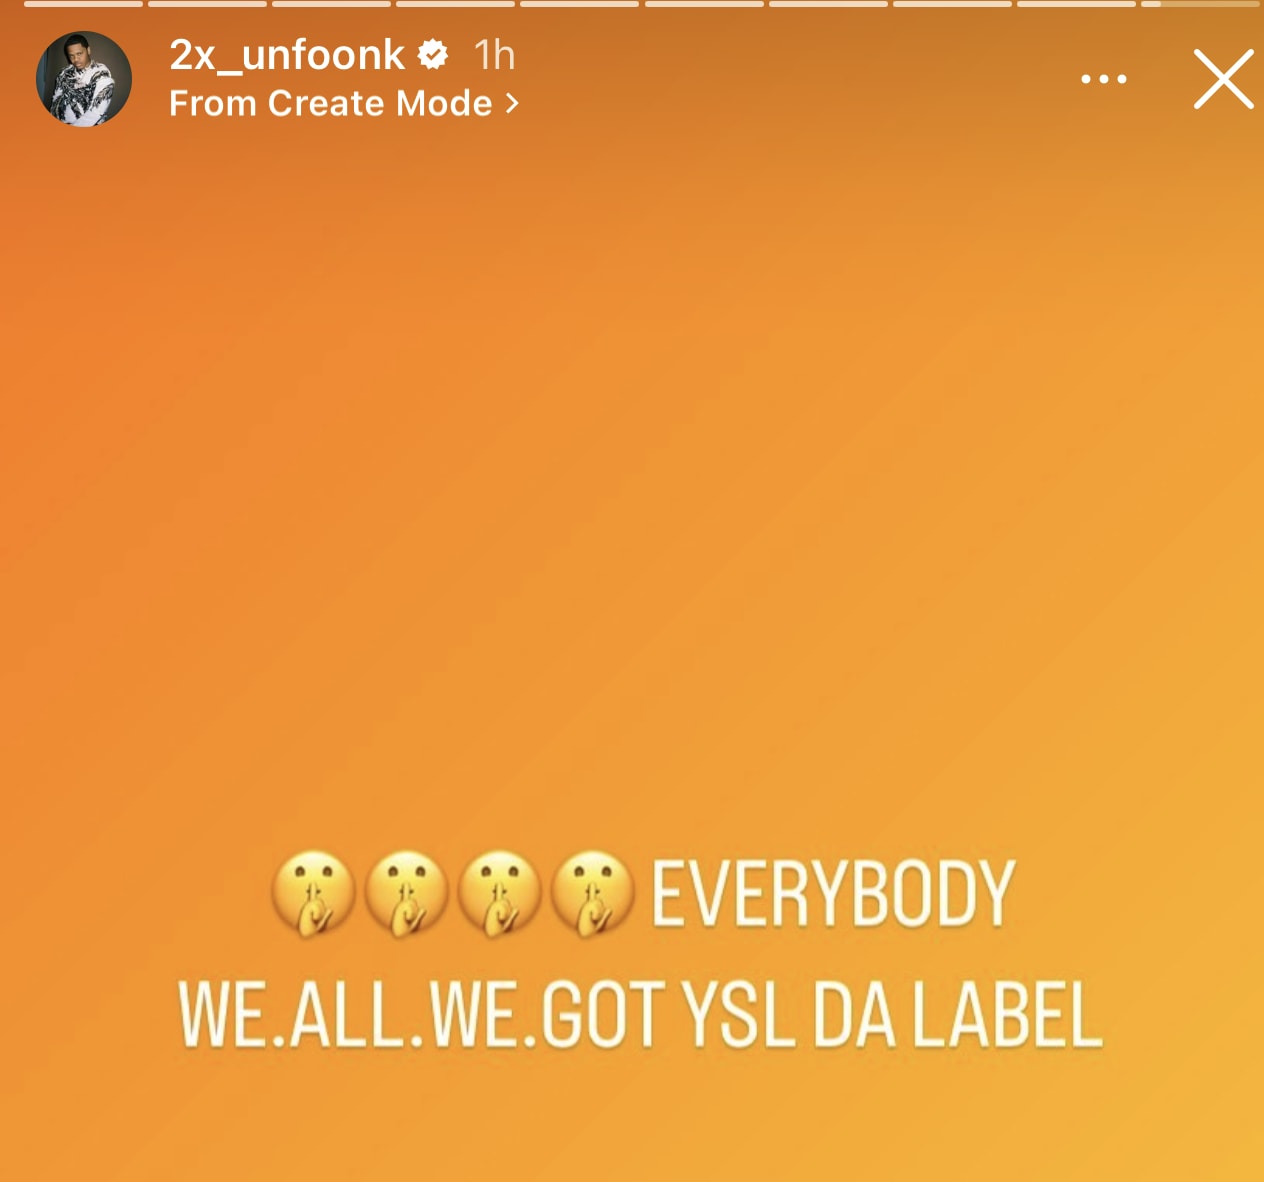 Unfoonk is seen posting on Instagram